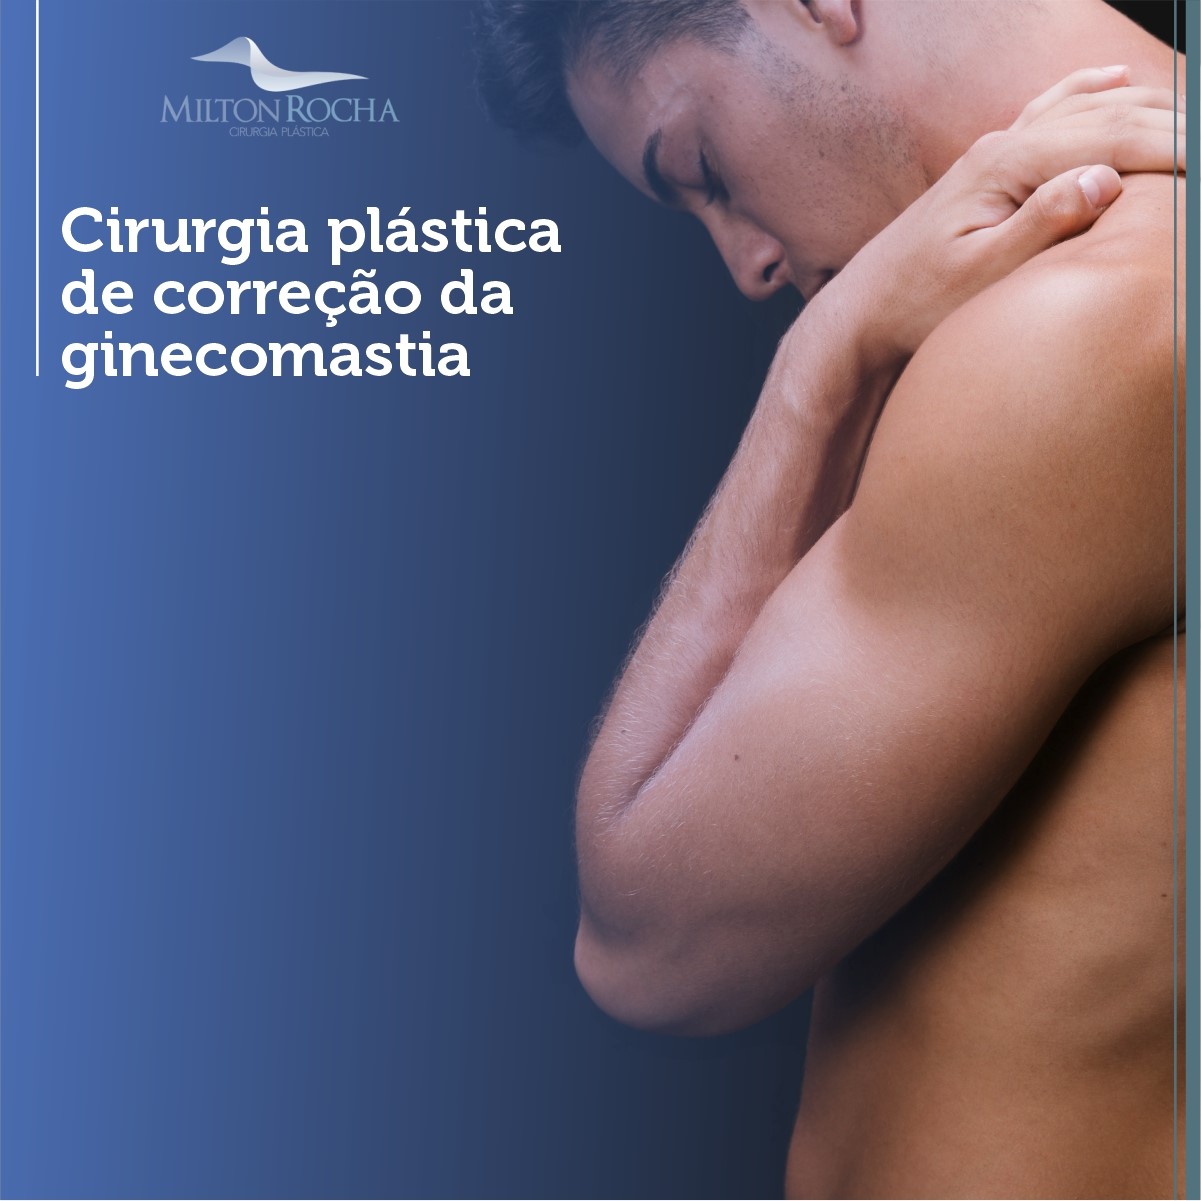 You are currently viewing Cirurgia Plástica Recife – Ginecomastia – Cirurgia Plástica de correção da ginecomastia.